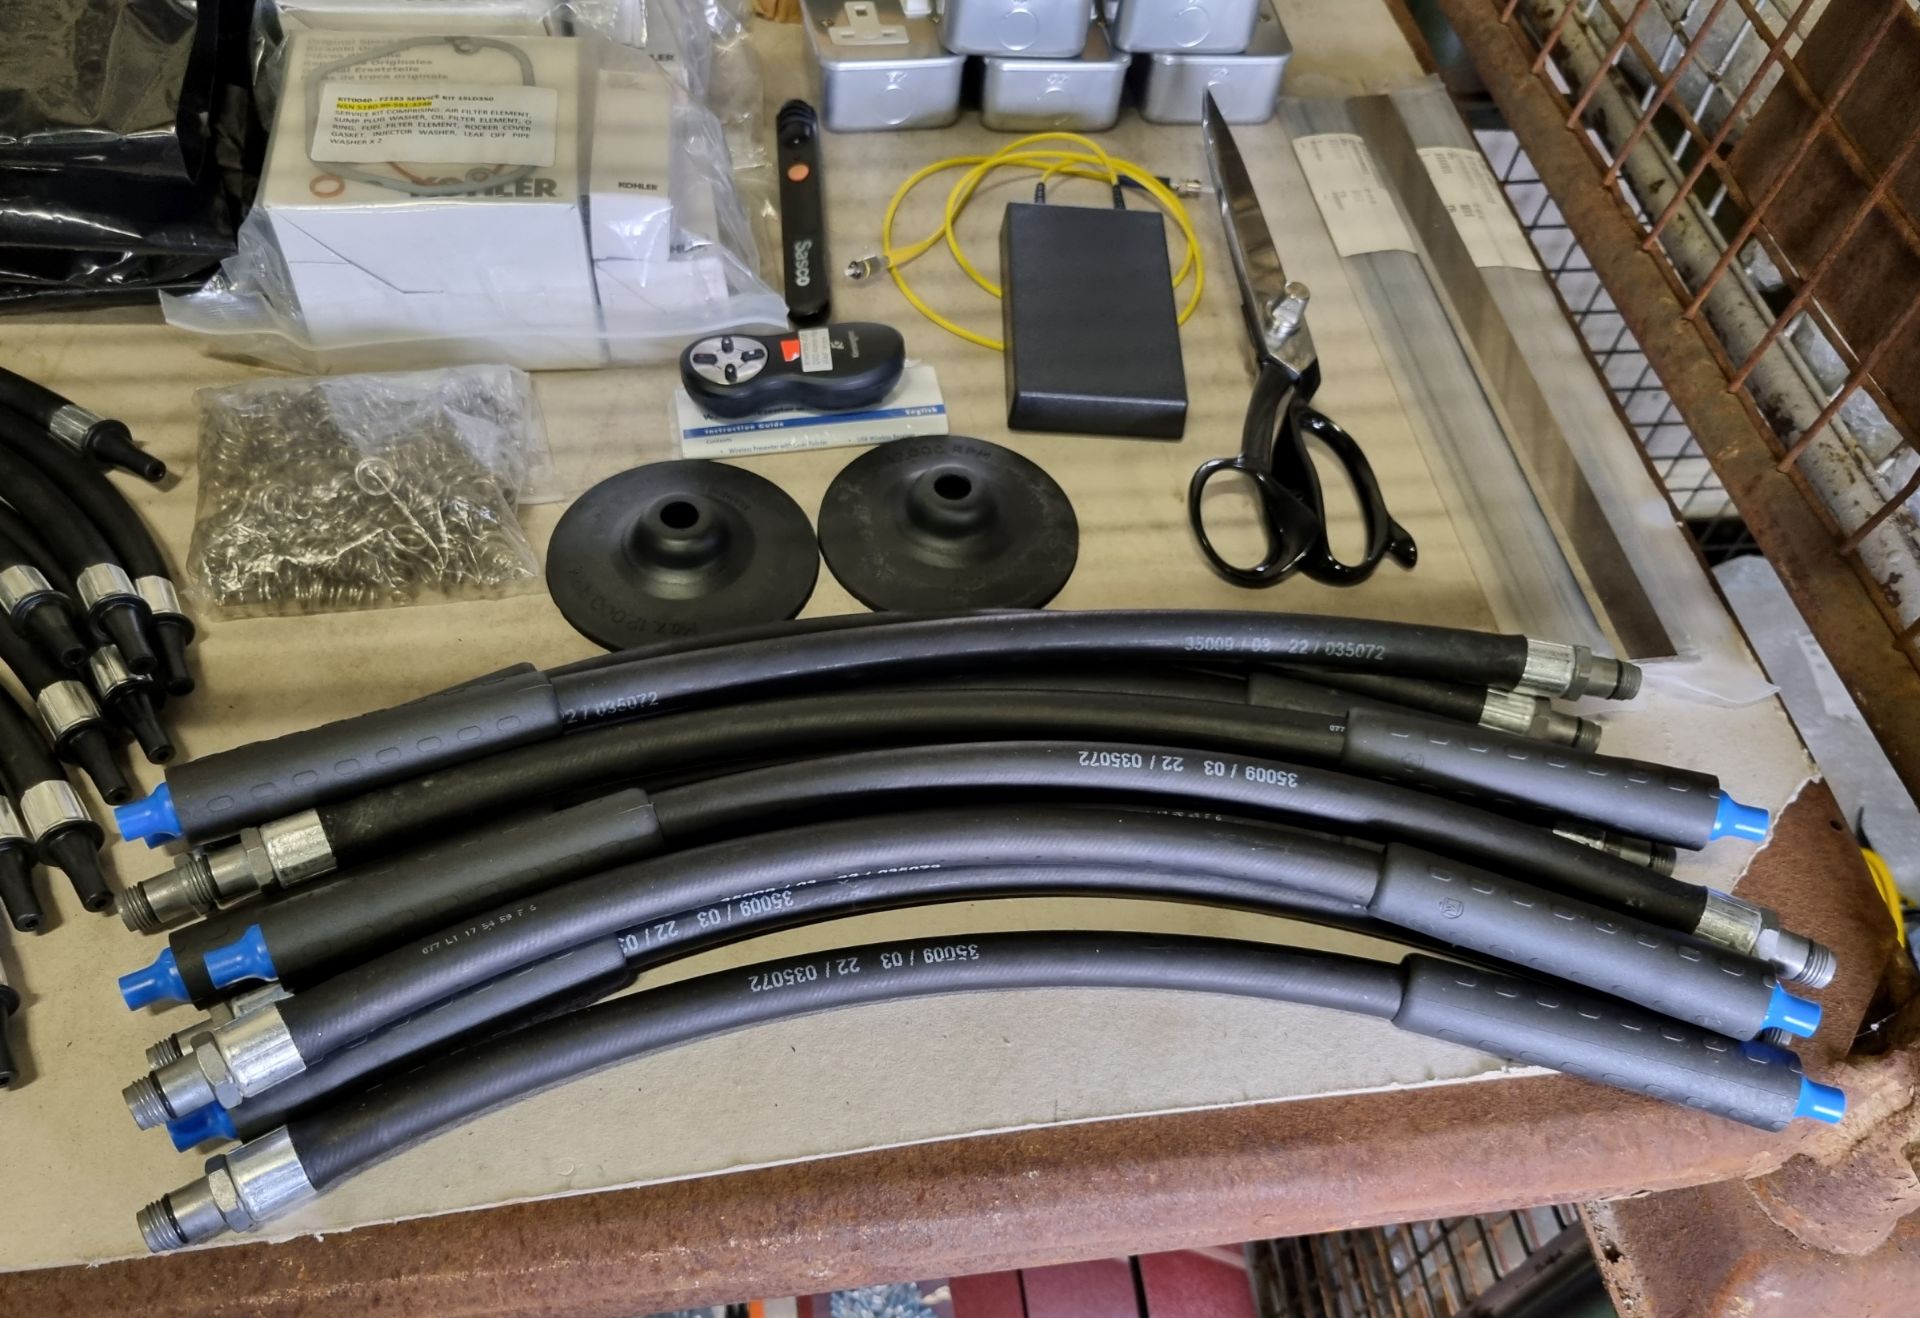 Workshop equipment - rubber hoses, Kohler F2183 service kits, M20x60 bolts, planer knives, couplings - Image 2 of 7